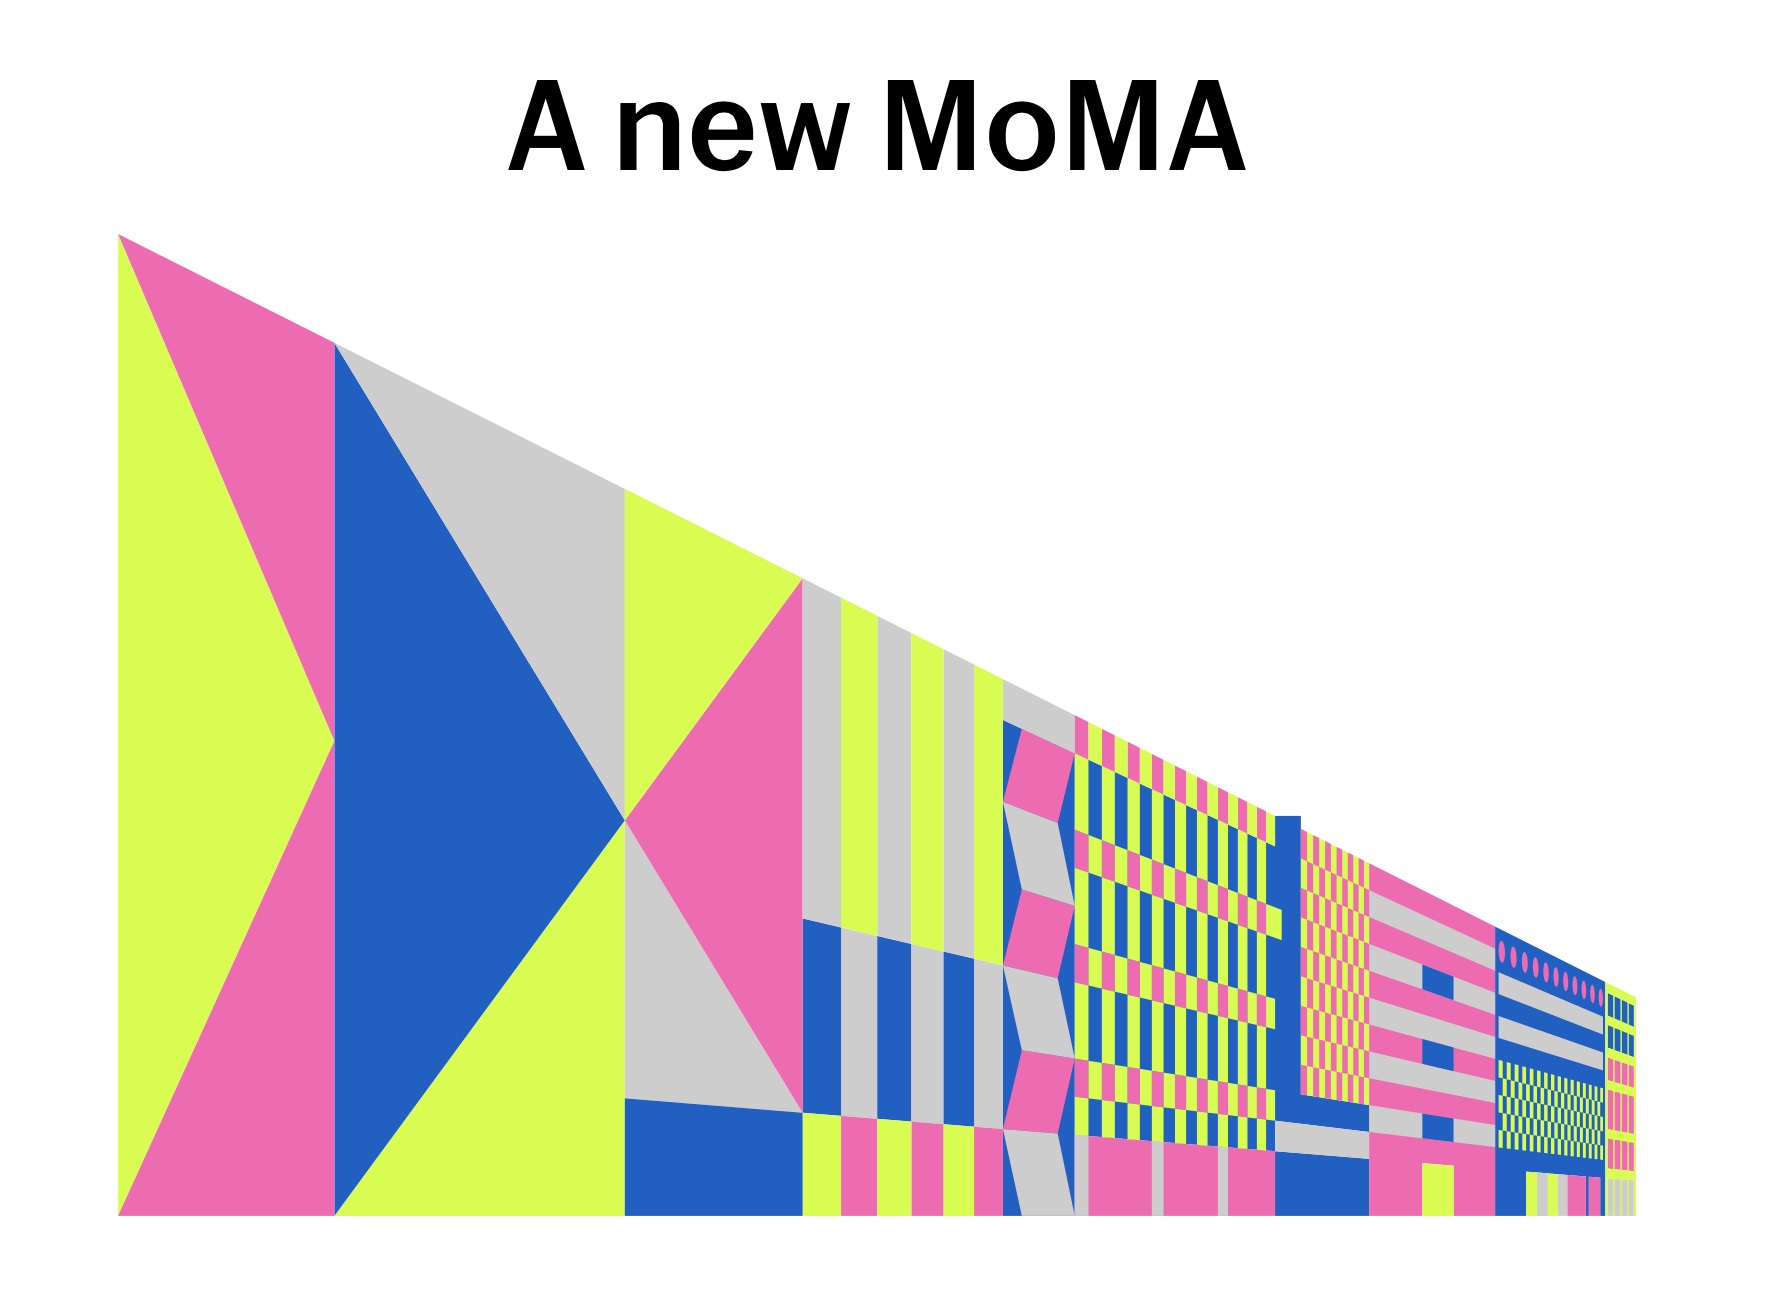 New MOMA 2019 BeLatina